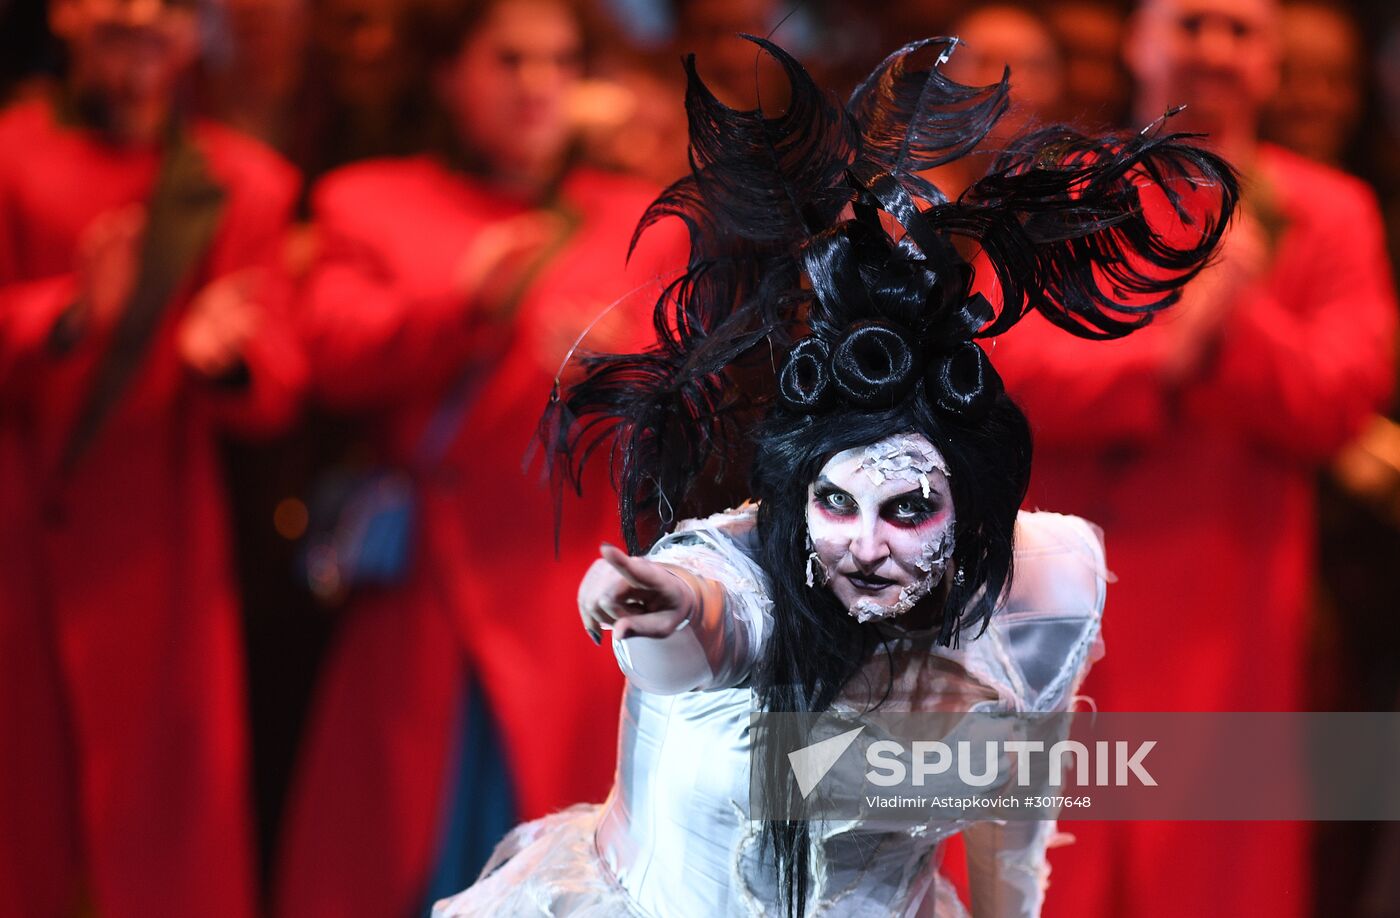 Turandot opera run-through at Helikon Opera